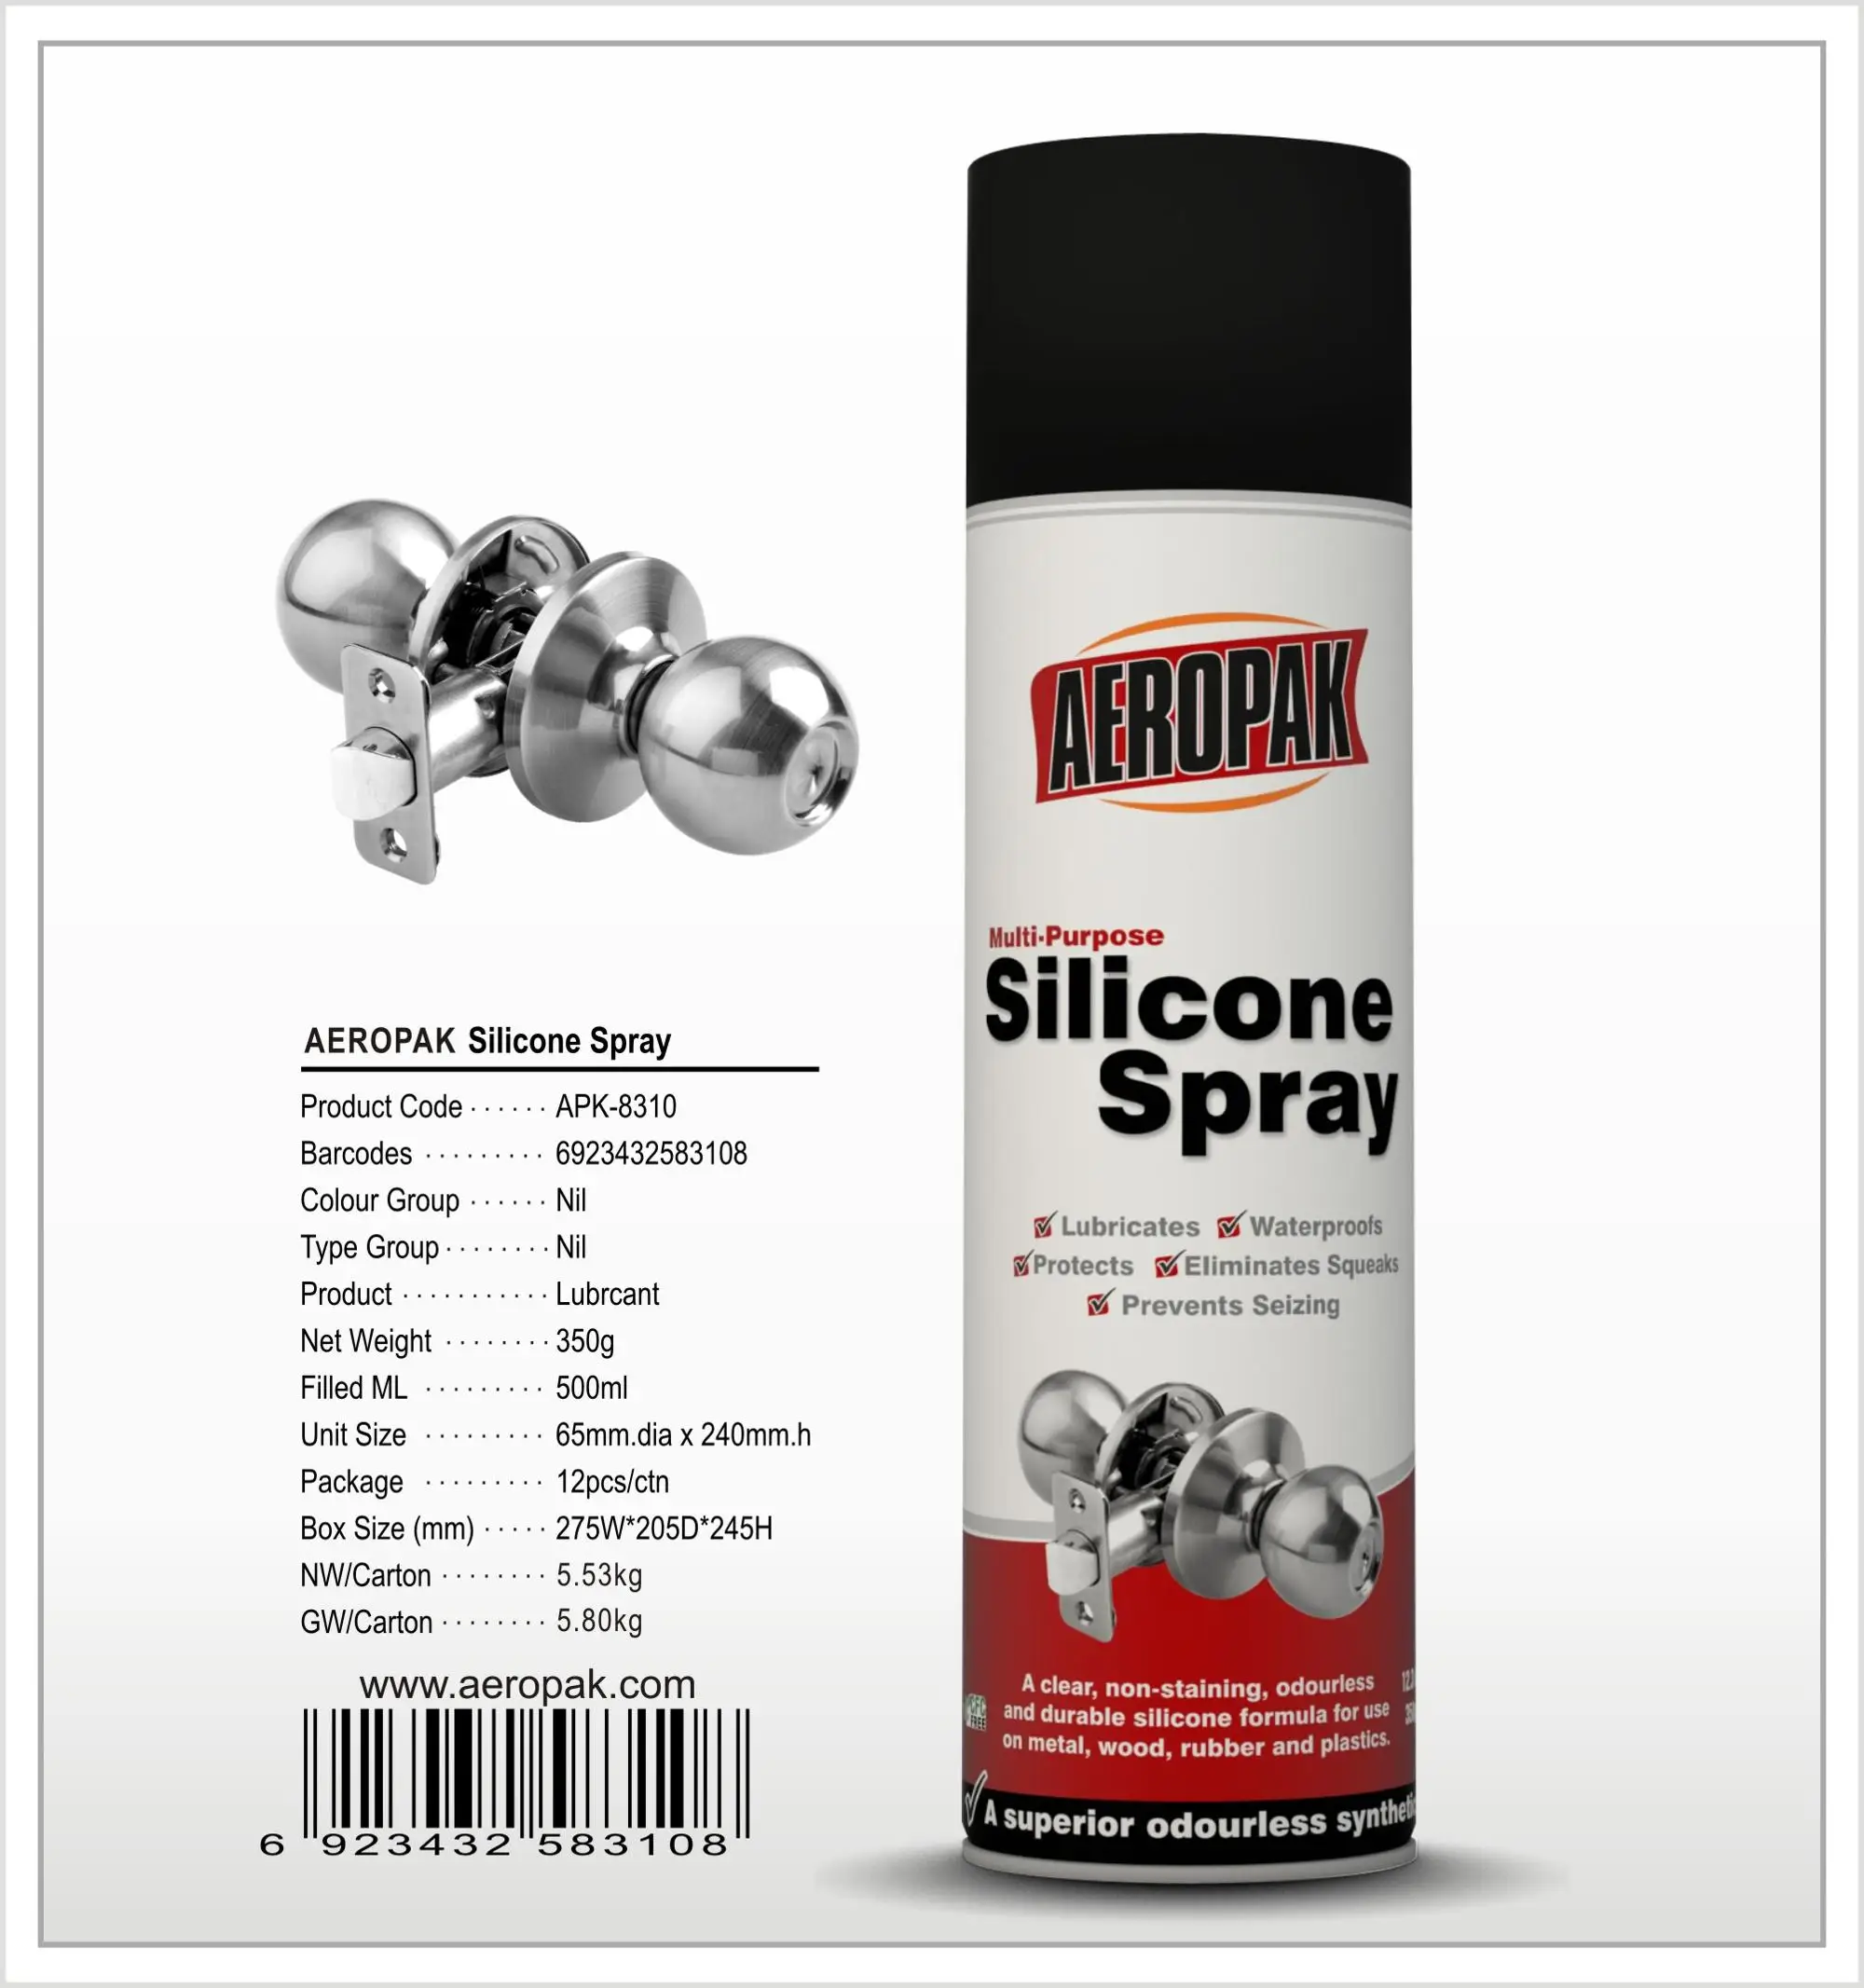 AEROPAK Silicone Oil Spray Manufacturer